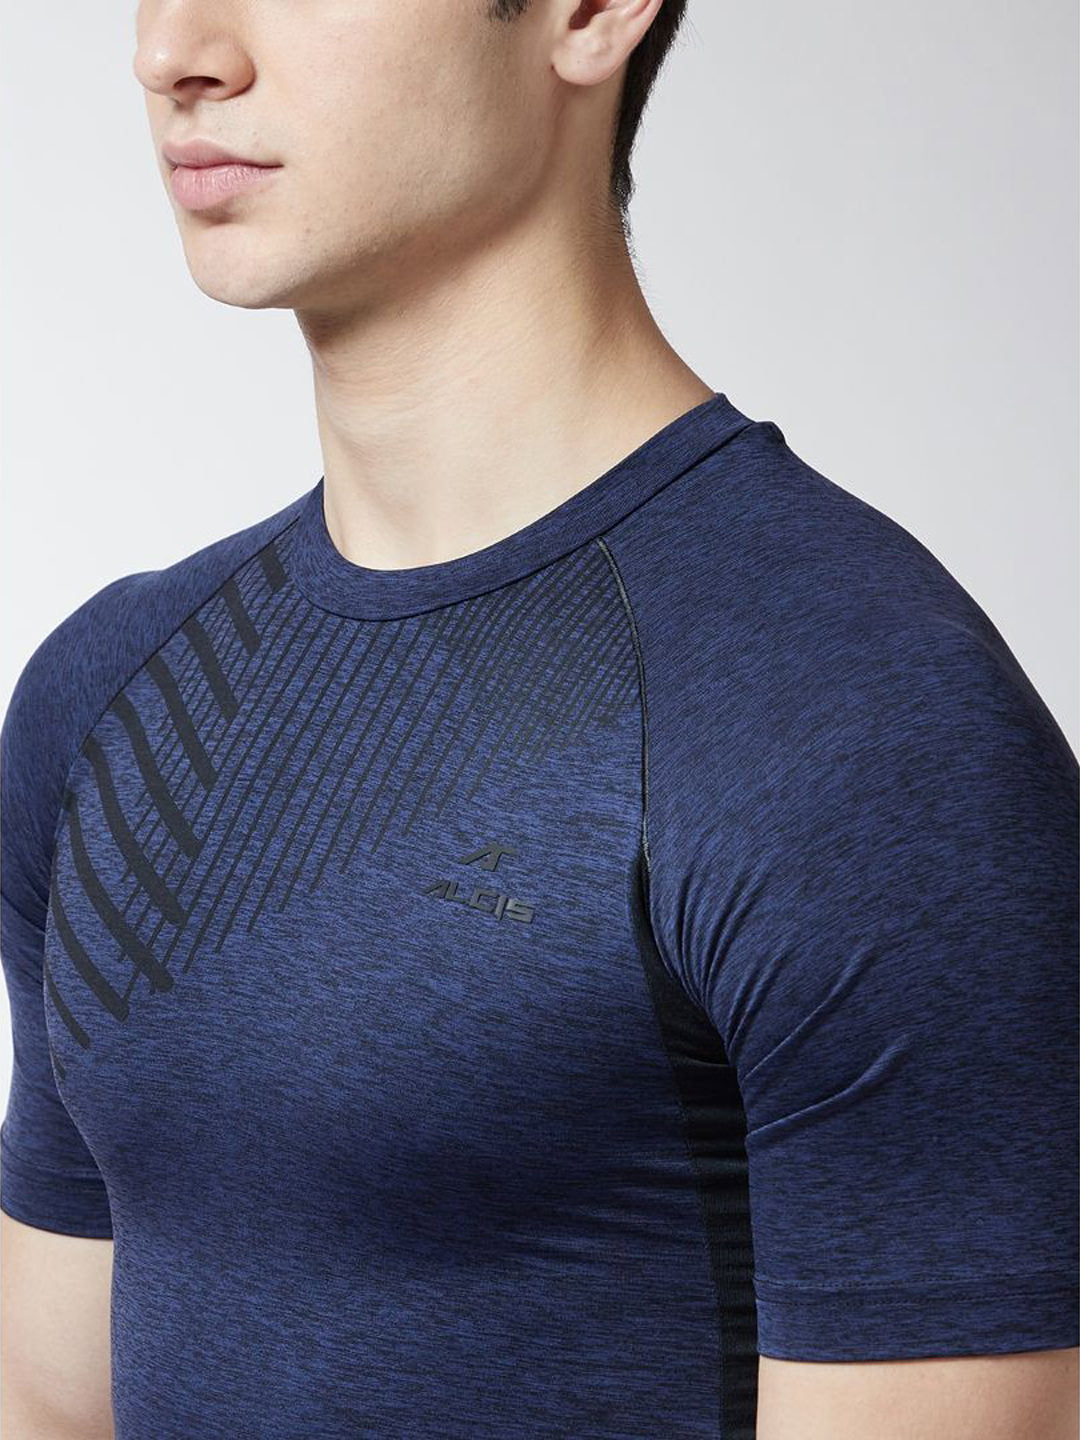 Alcis Men Navy Blue  Black Printed Detail Round Neck Training T-shirt